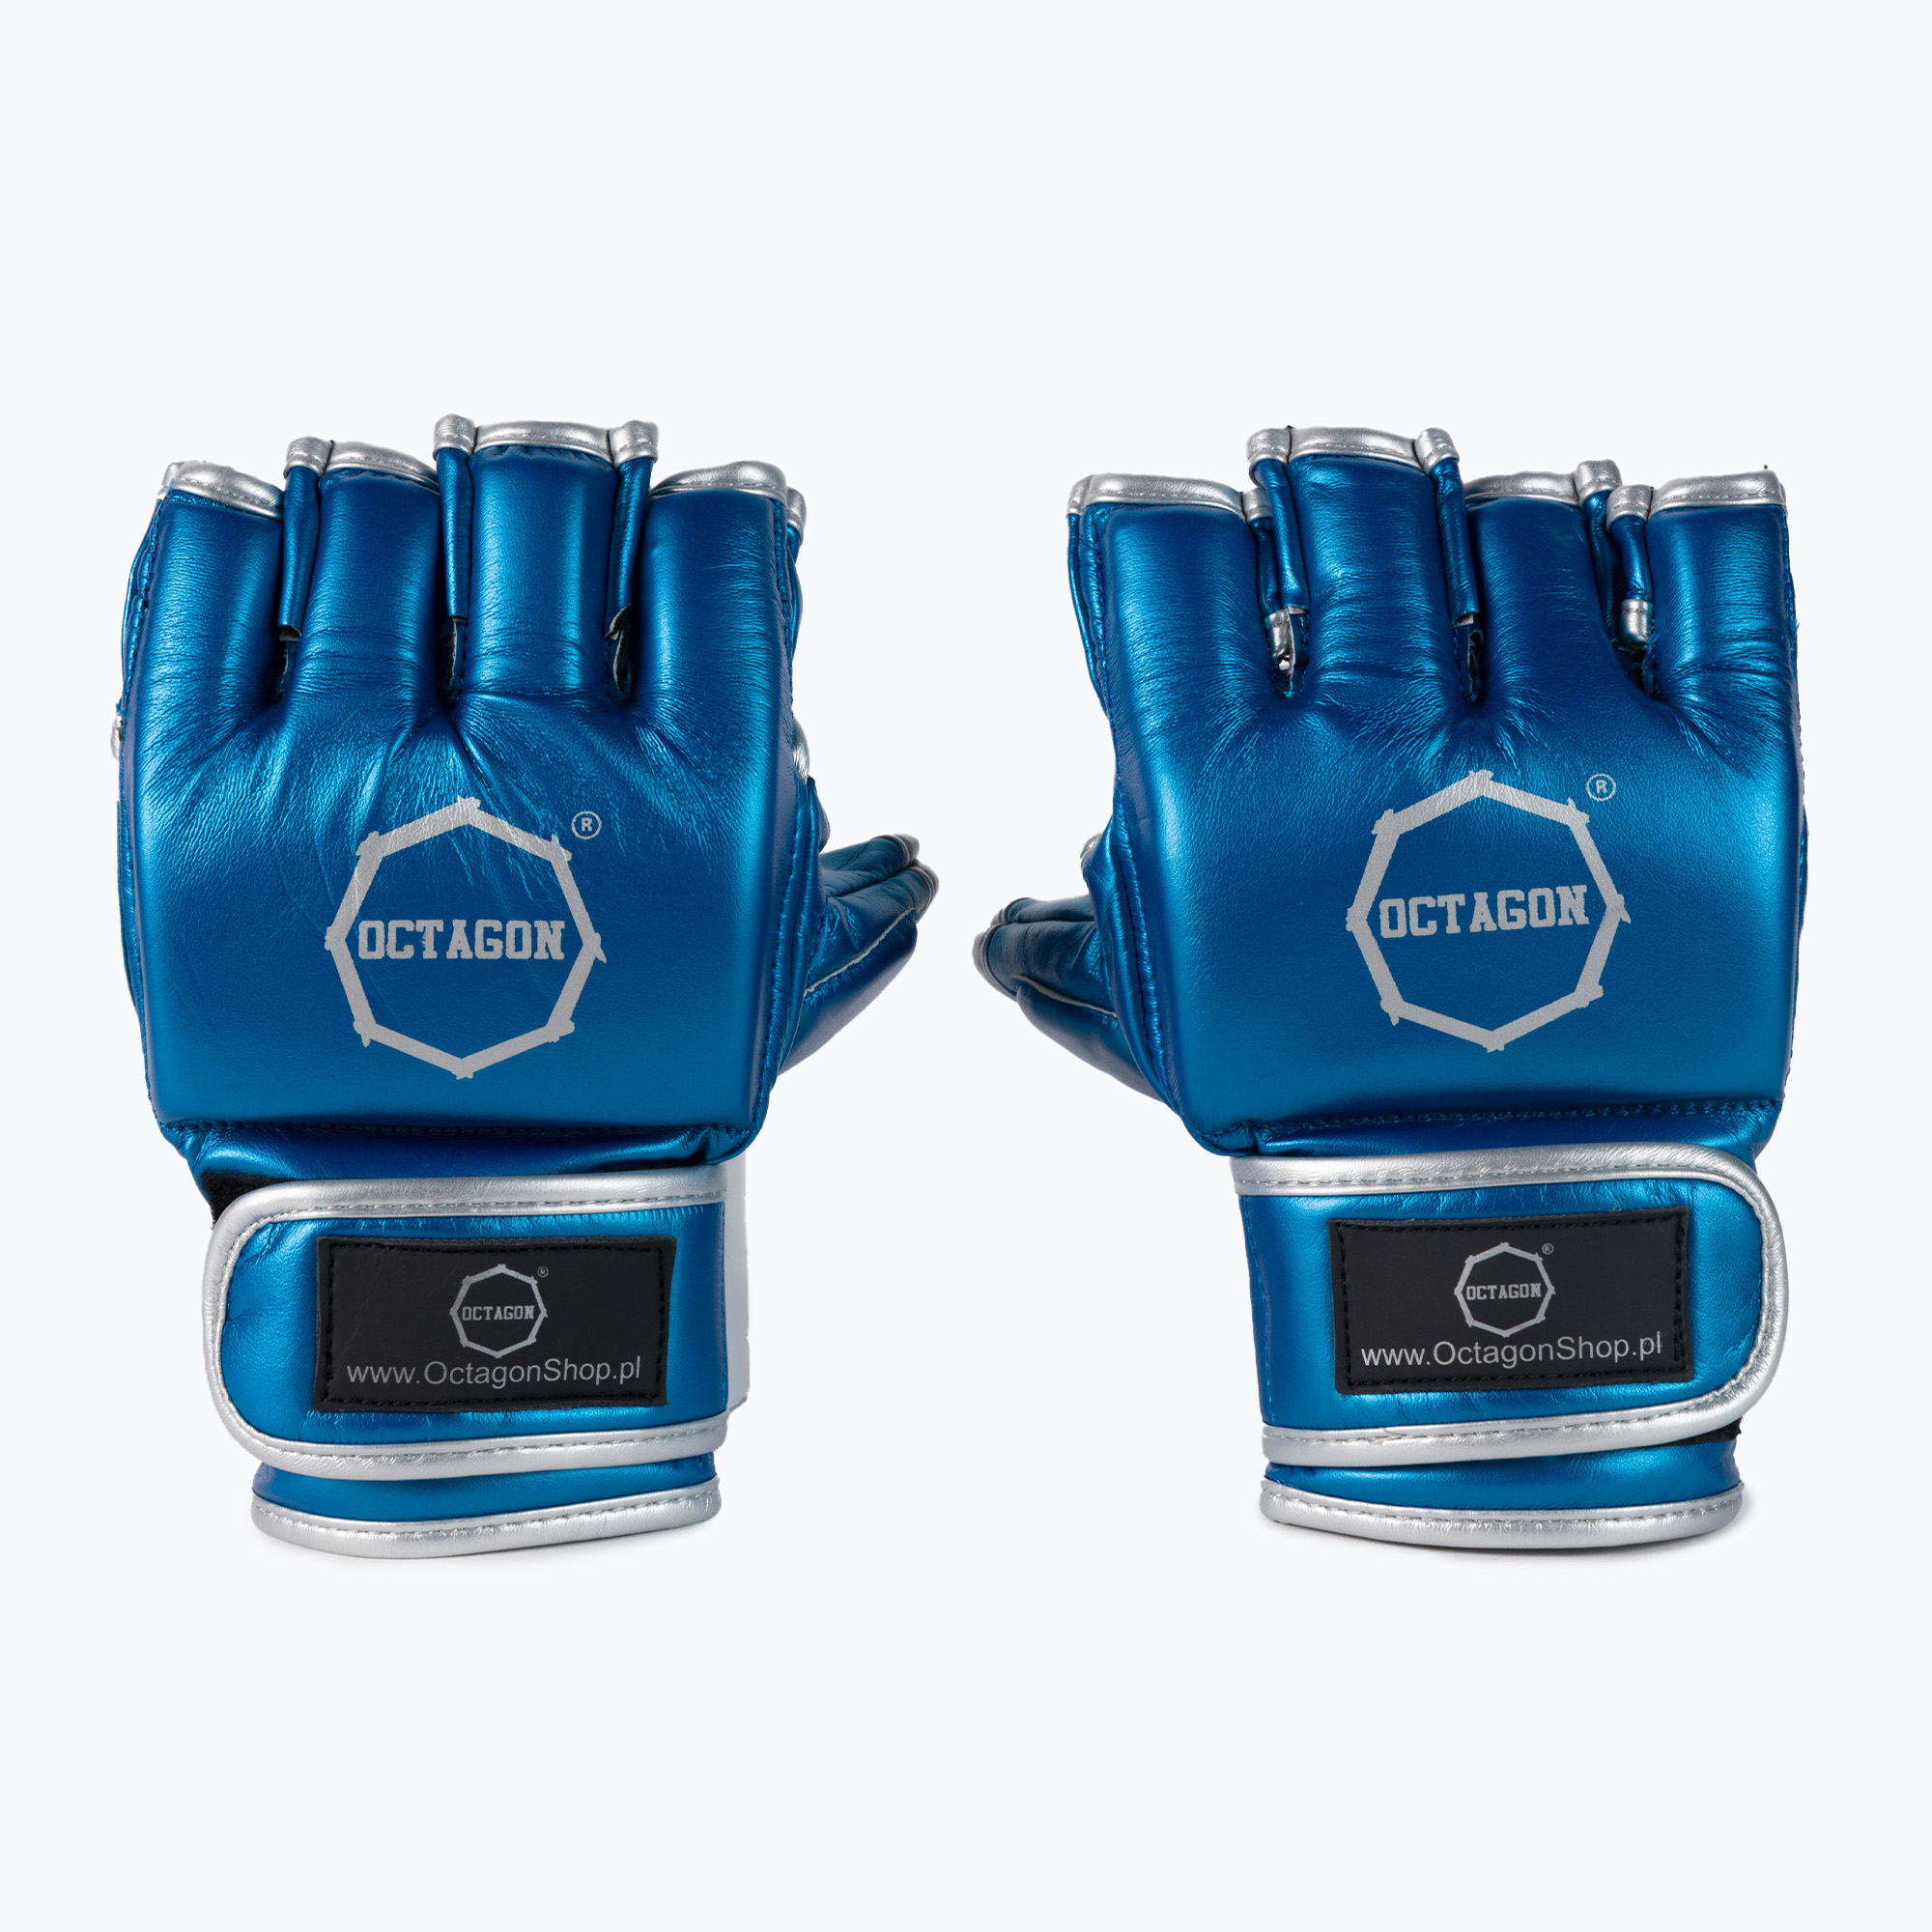 Oktagon MMA grapplingové rukavice modré